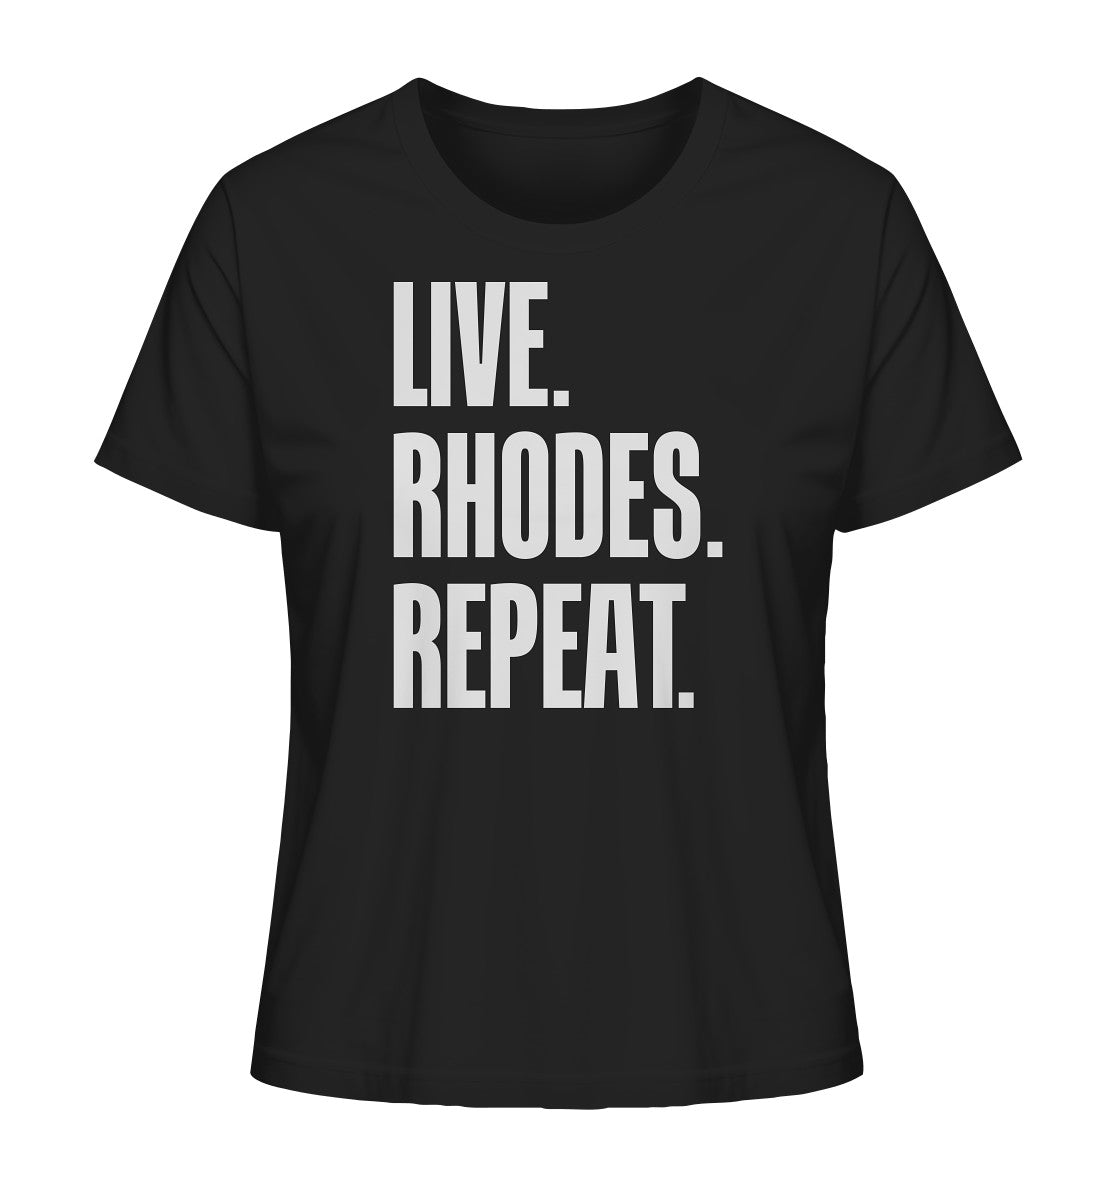 LIVE. RHODES. REPEAT. - Ladies Organic Shirt